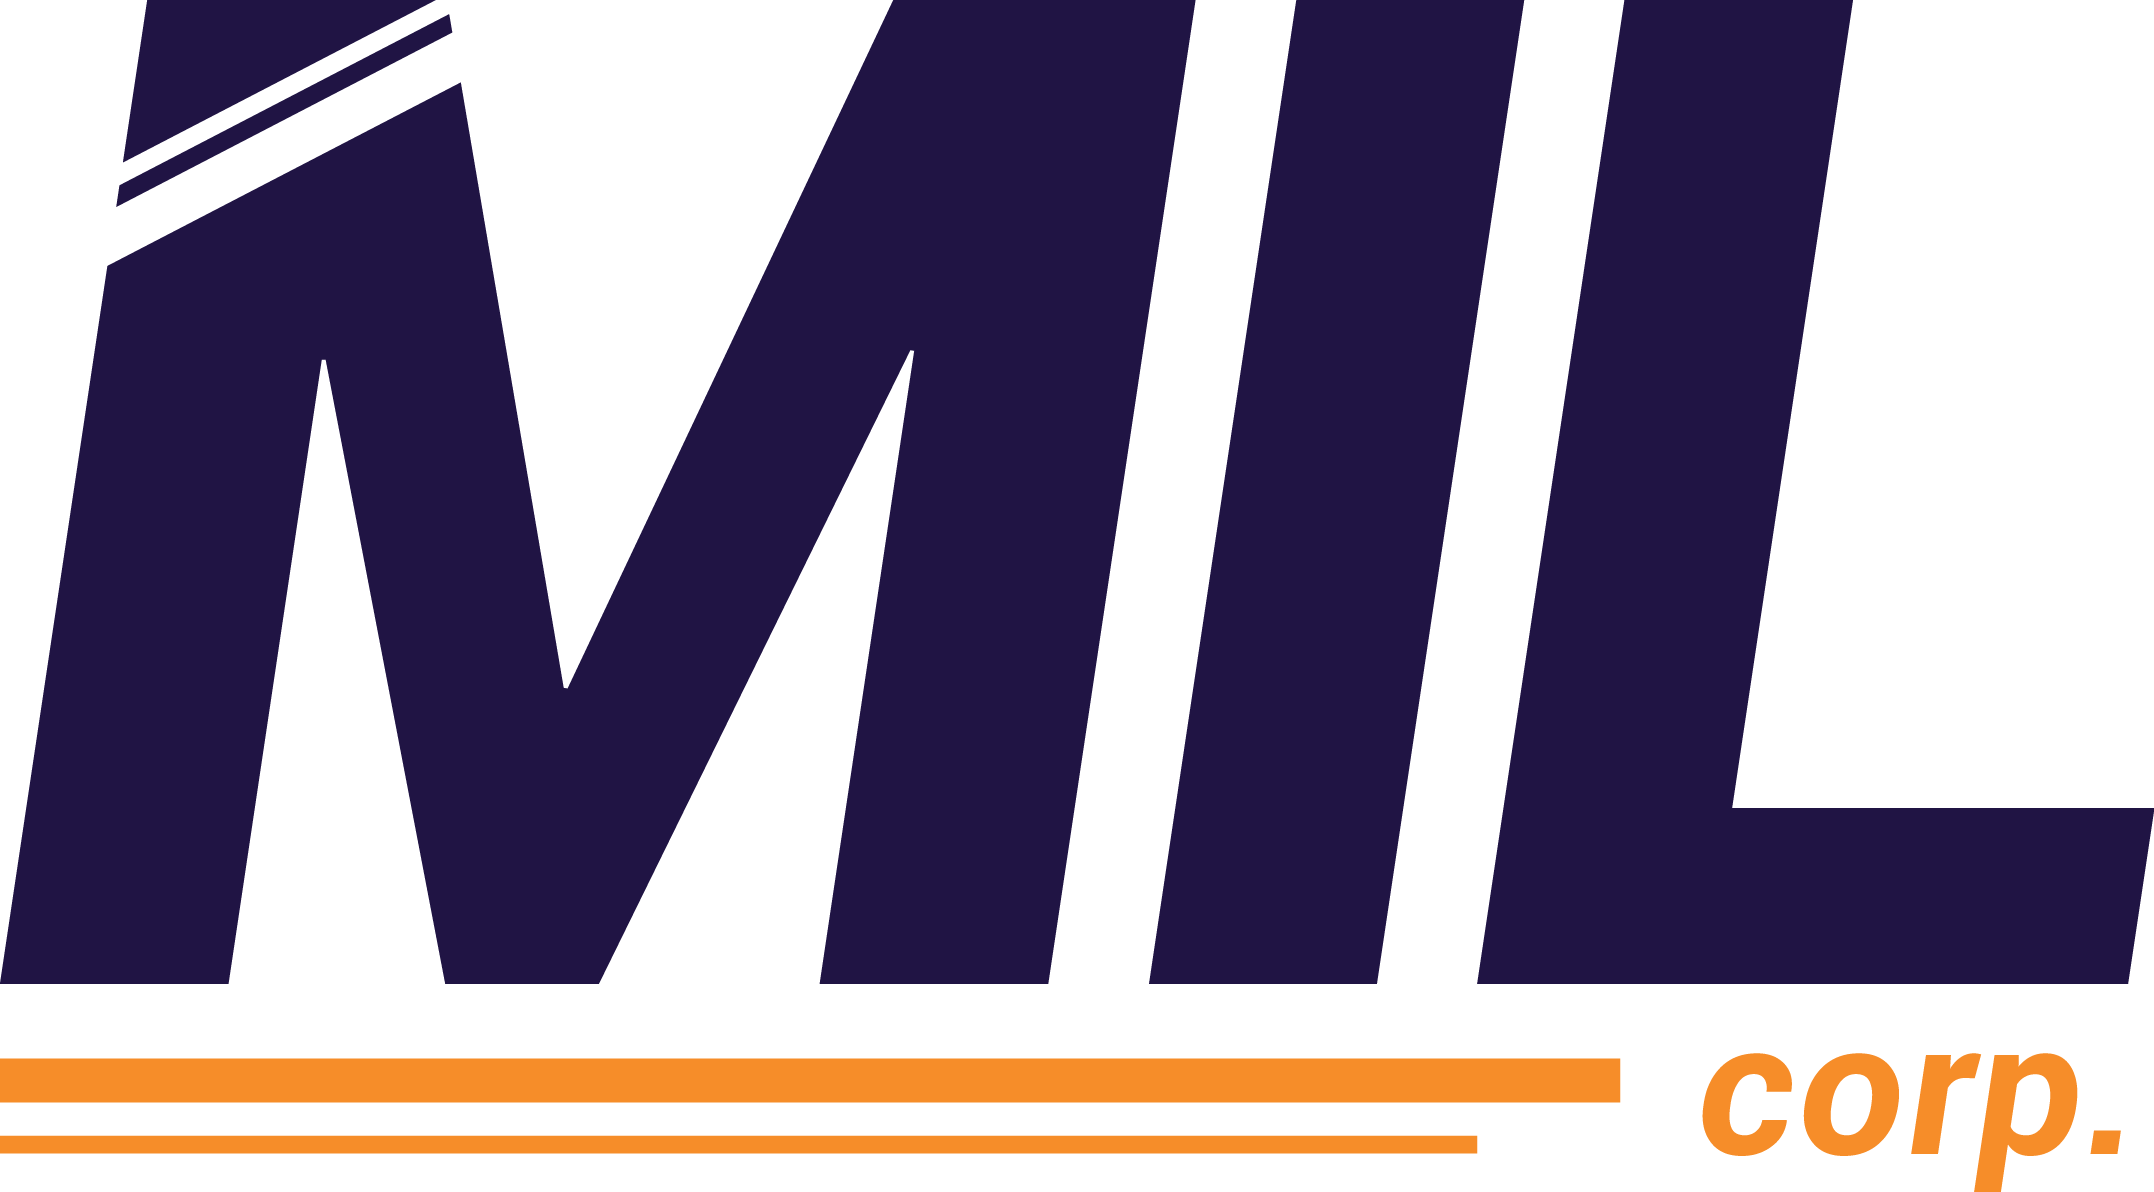 The MIL Corporation logo